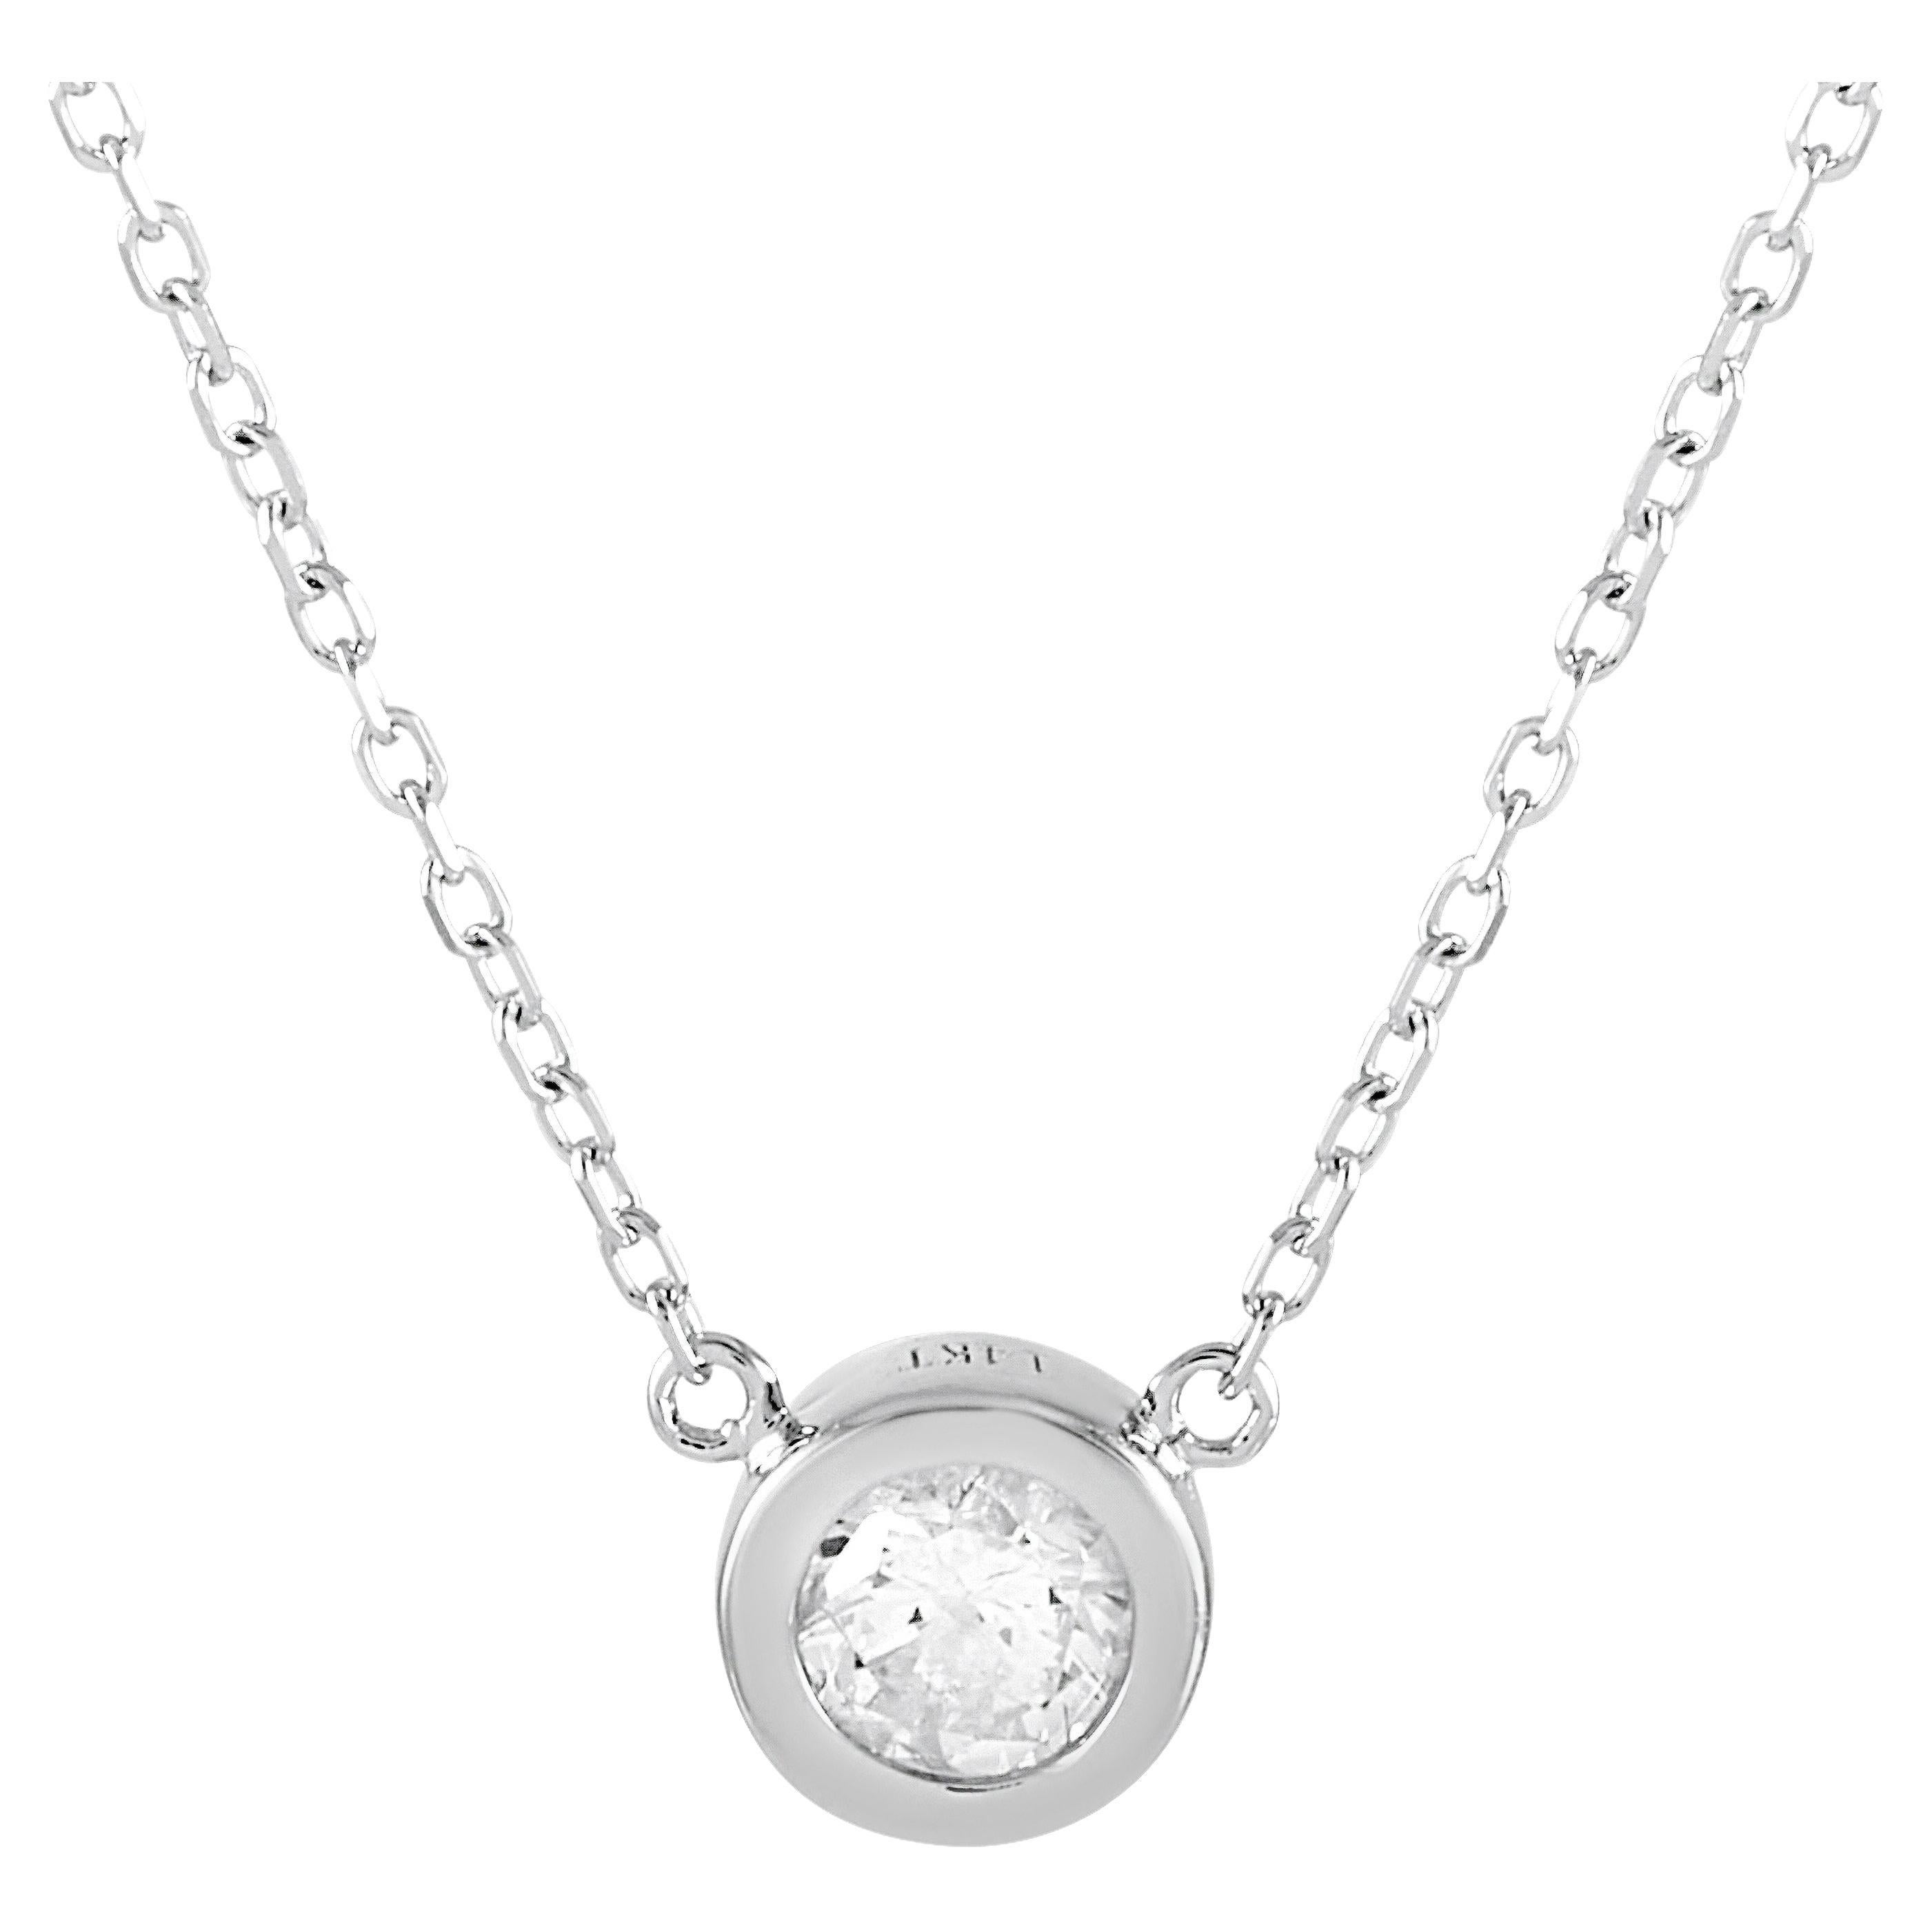 LB Exclusive 14k White Gold 0.20 Carat Diamond Necklace